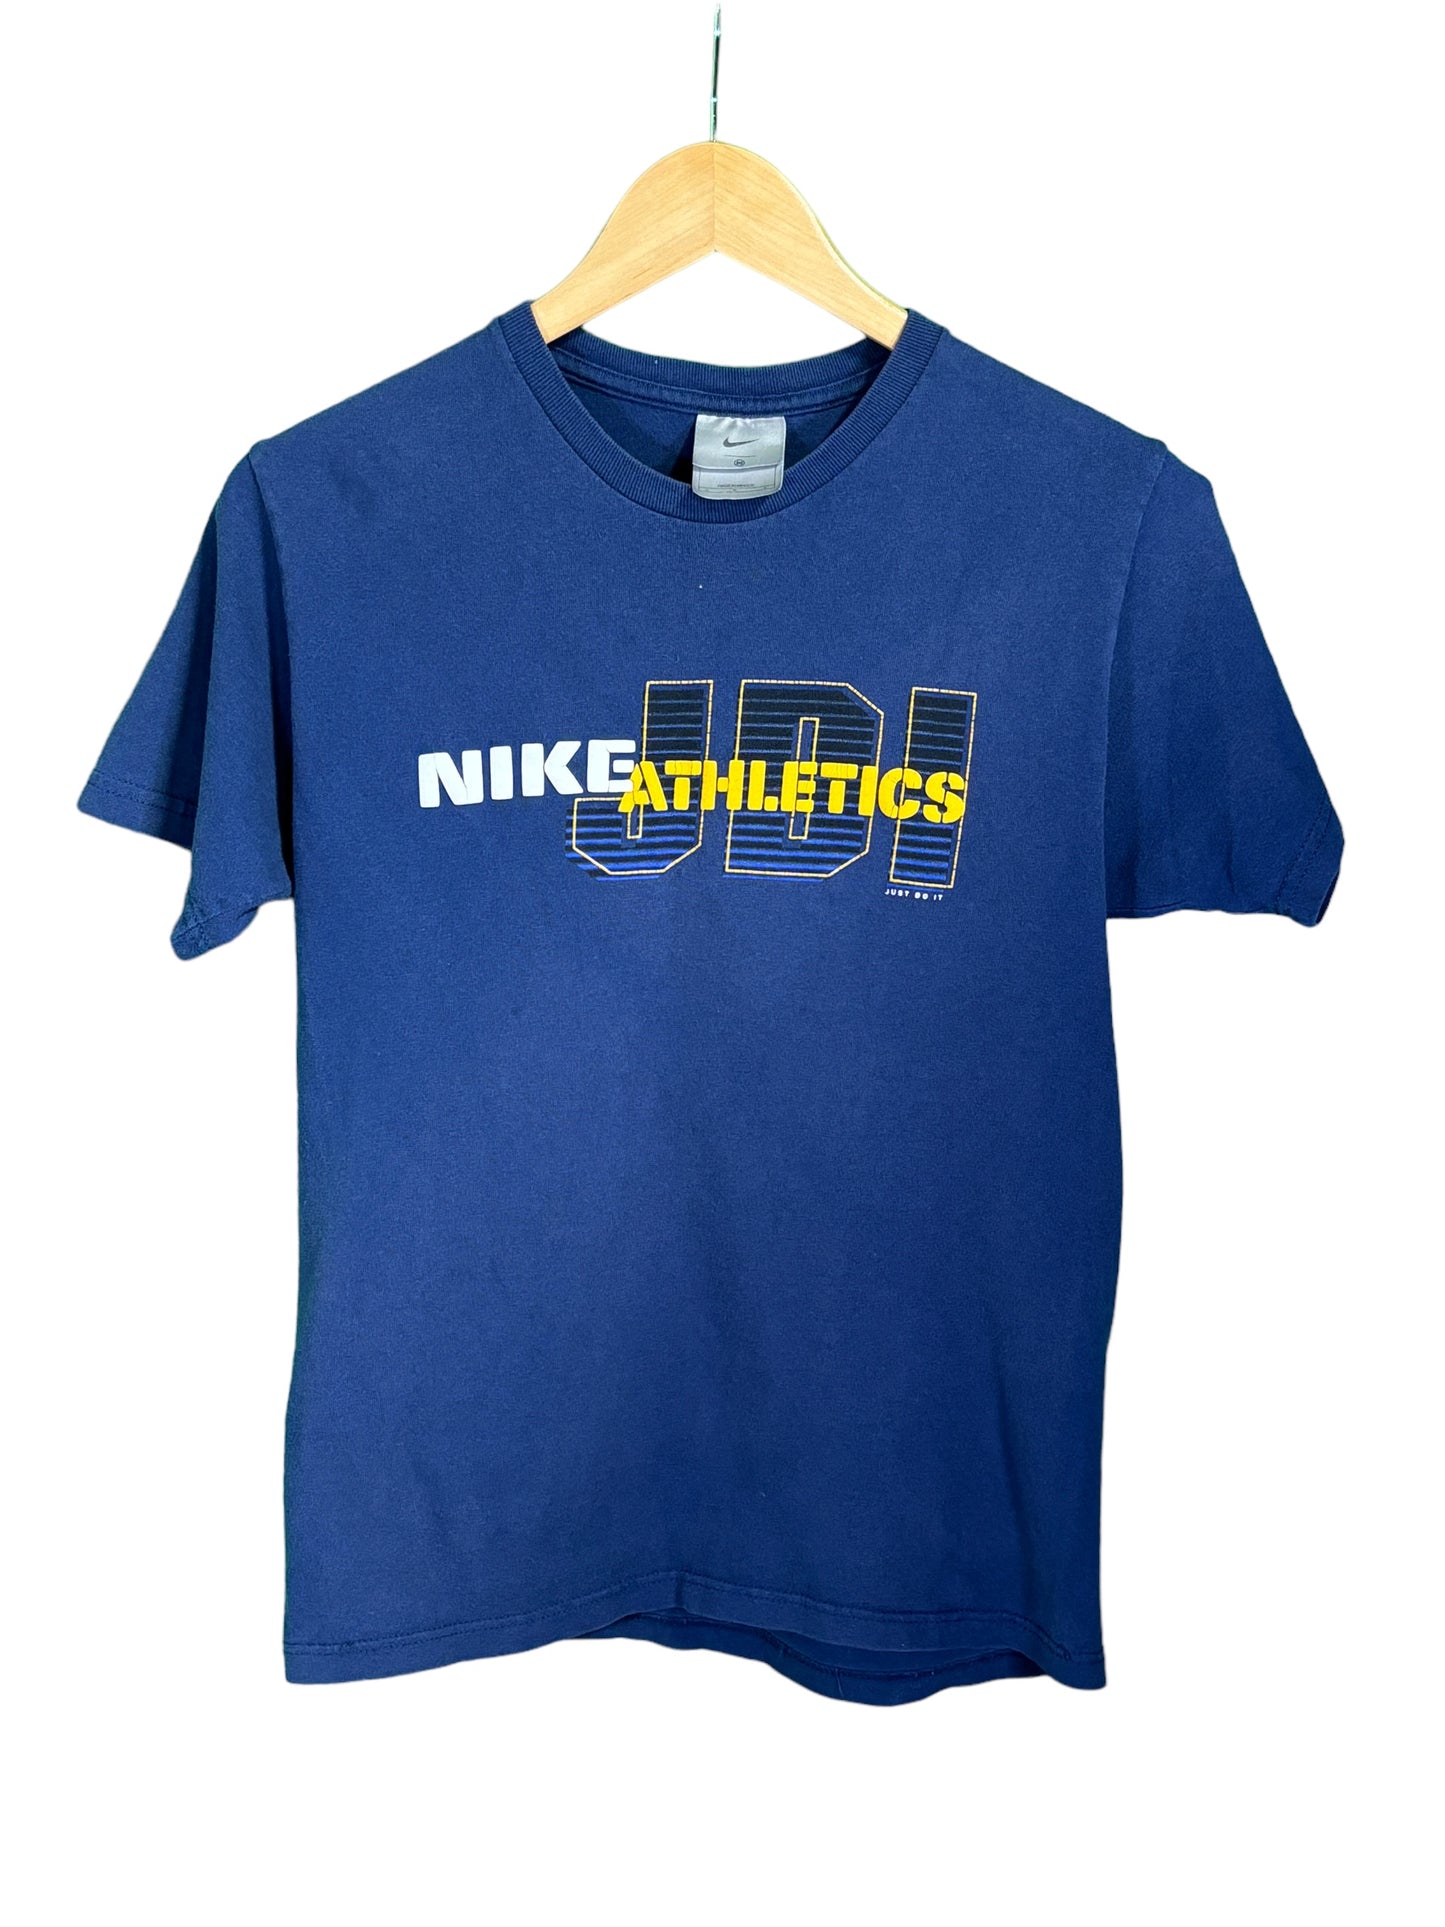 Vintage 00's Nike Athletics Just Do It Graphic Tee Size Youth Medium